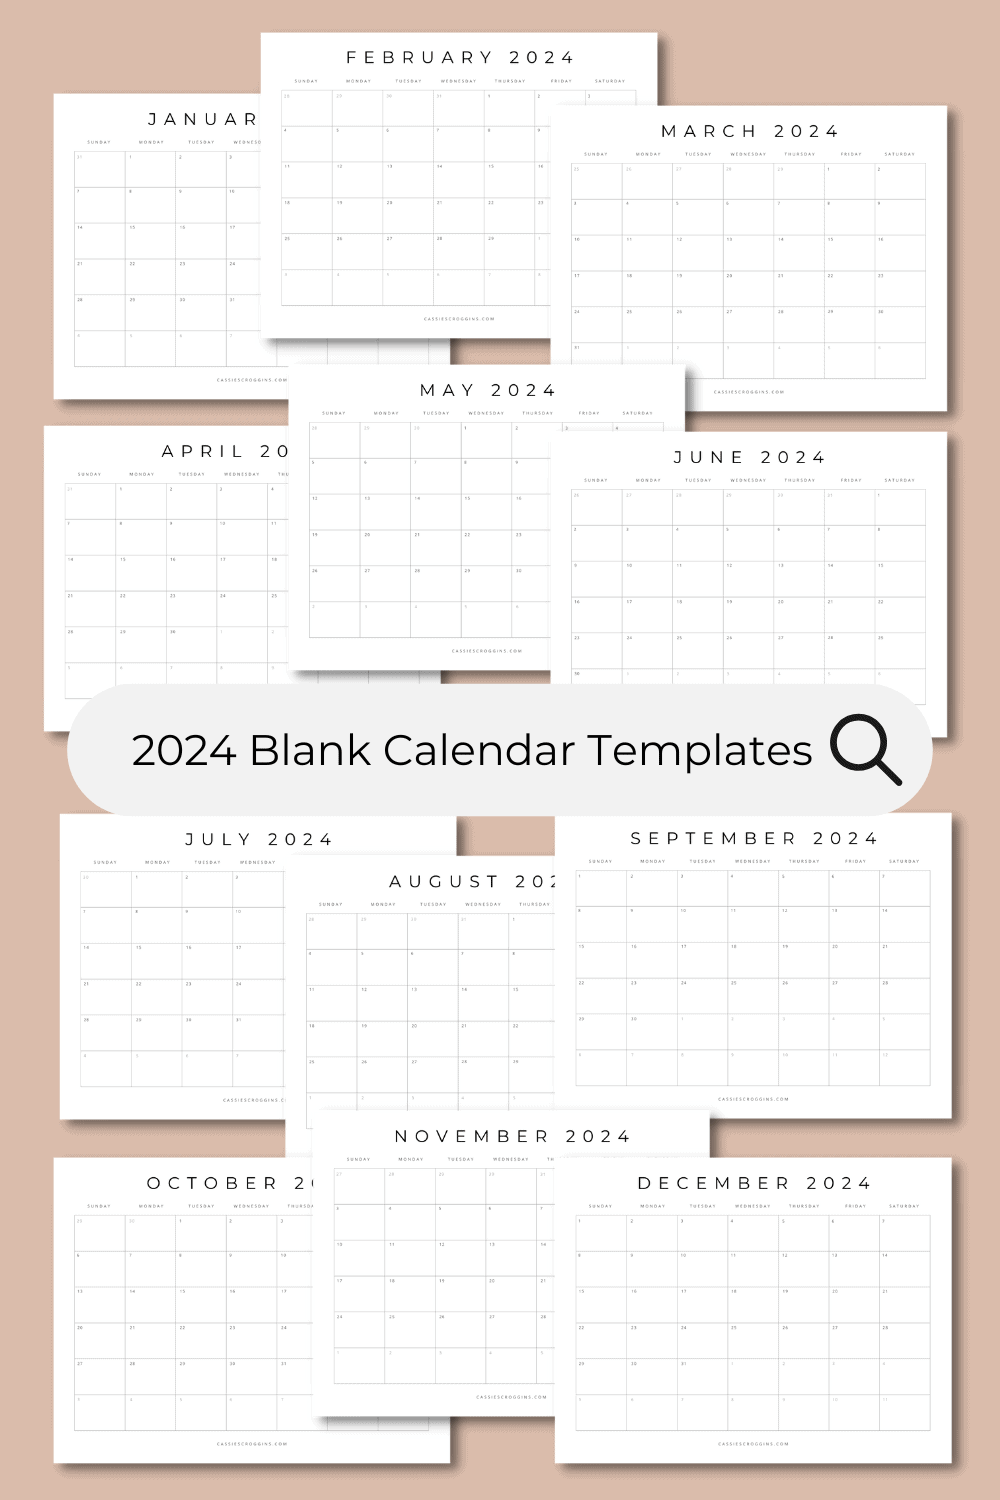 Free Printable 2024 Blank Calendar Templates (All 12 Months) intended for Free Printable Blank Calendar Pages 2024